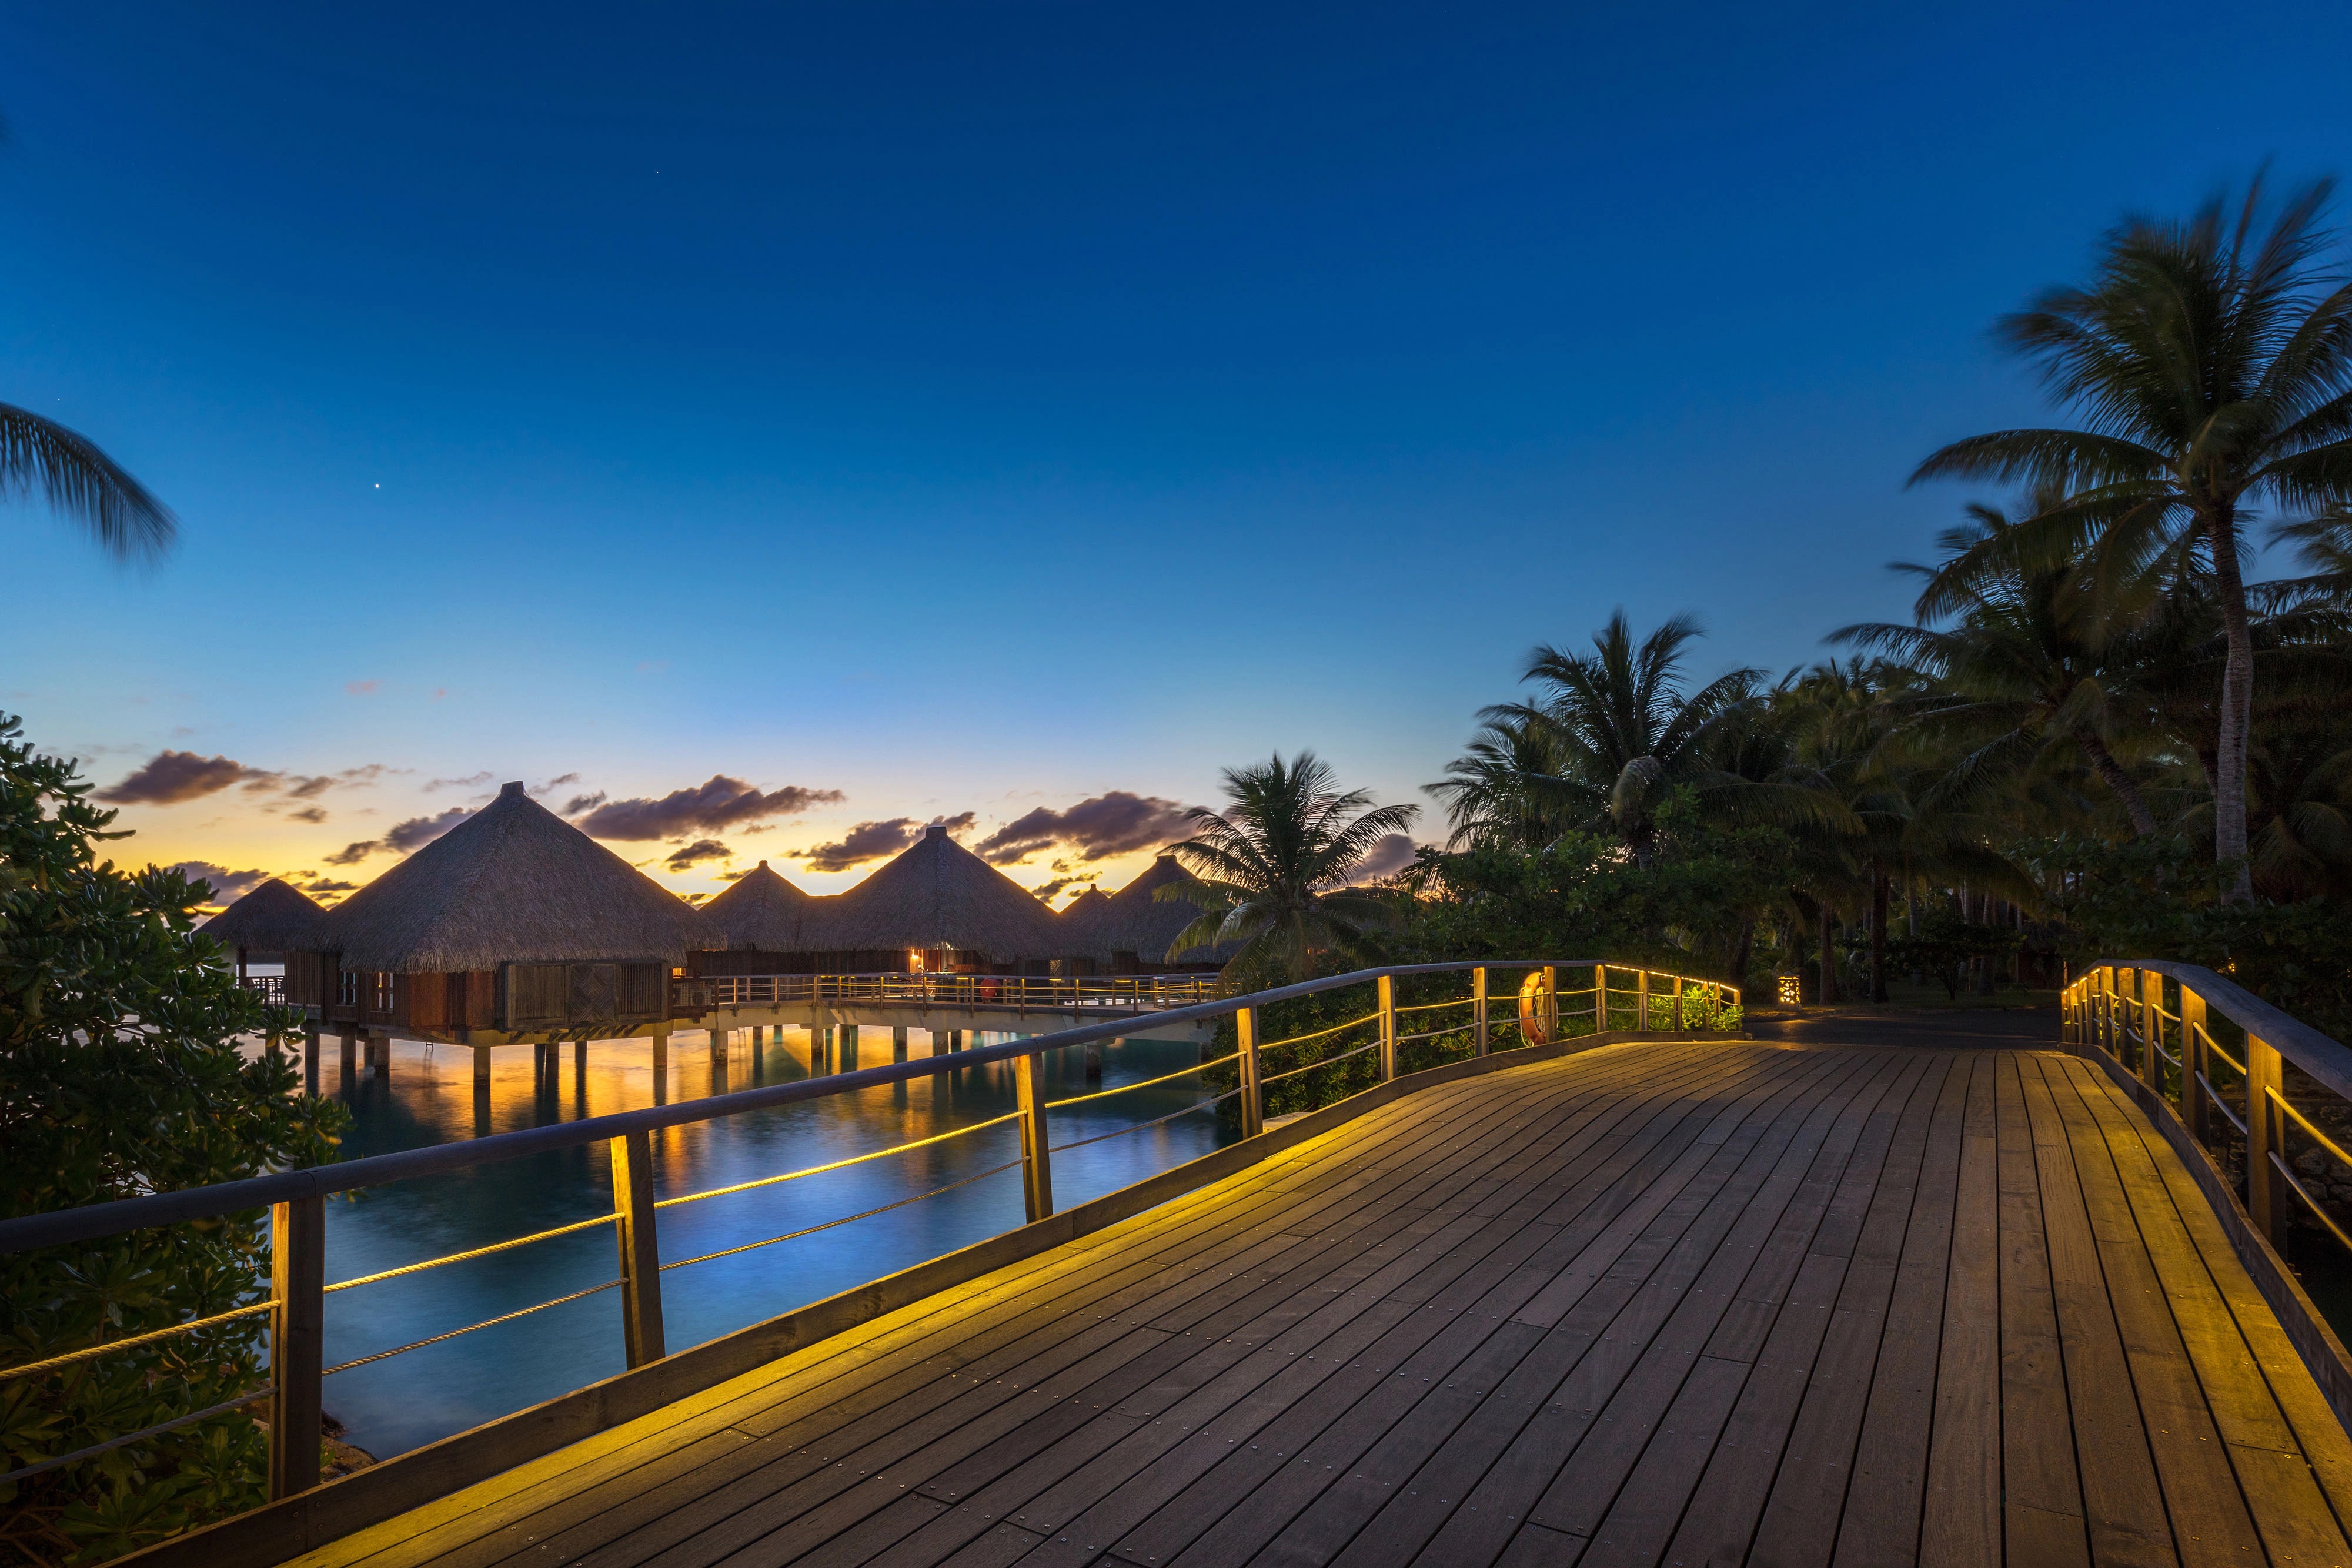 The St. Regis Bora Bora Resort bobxr-landscape-7238-hor-clsc